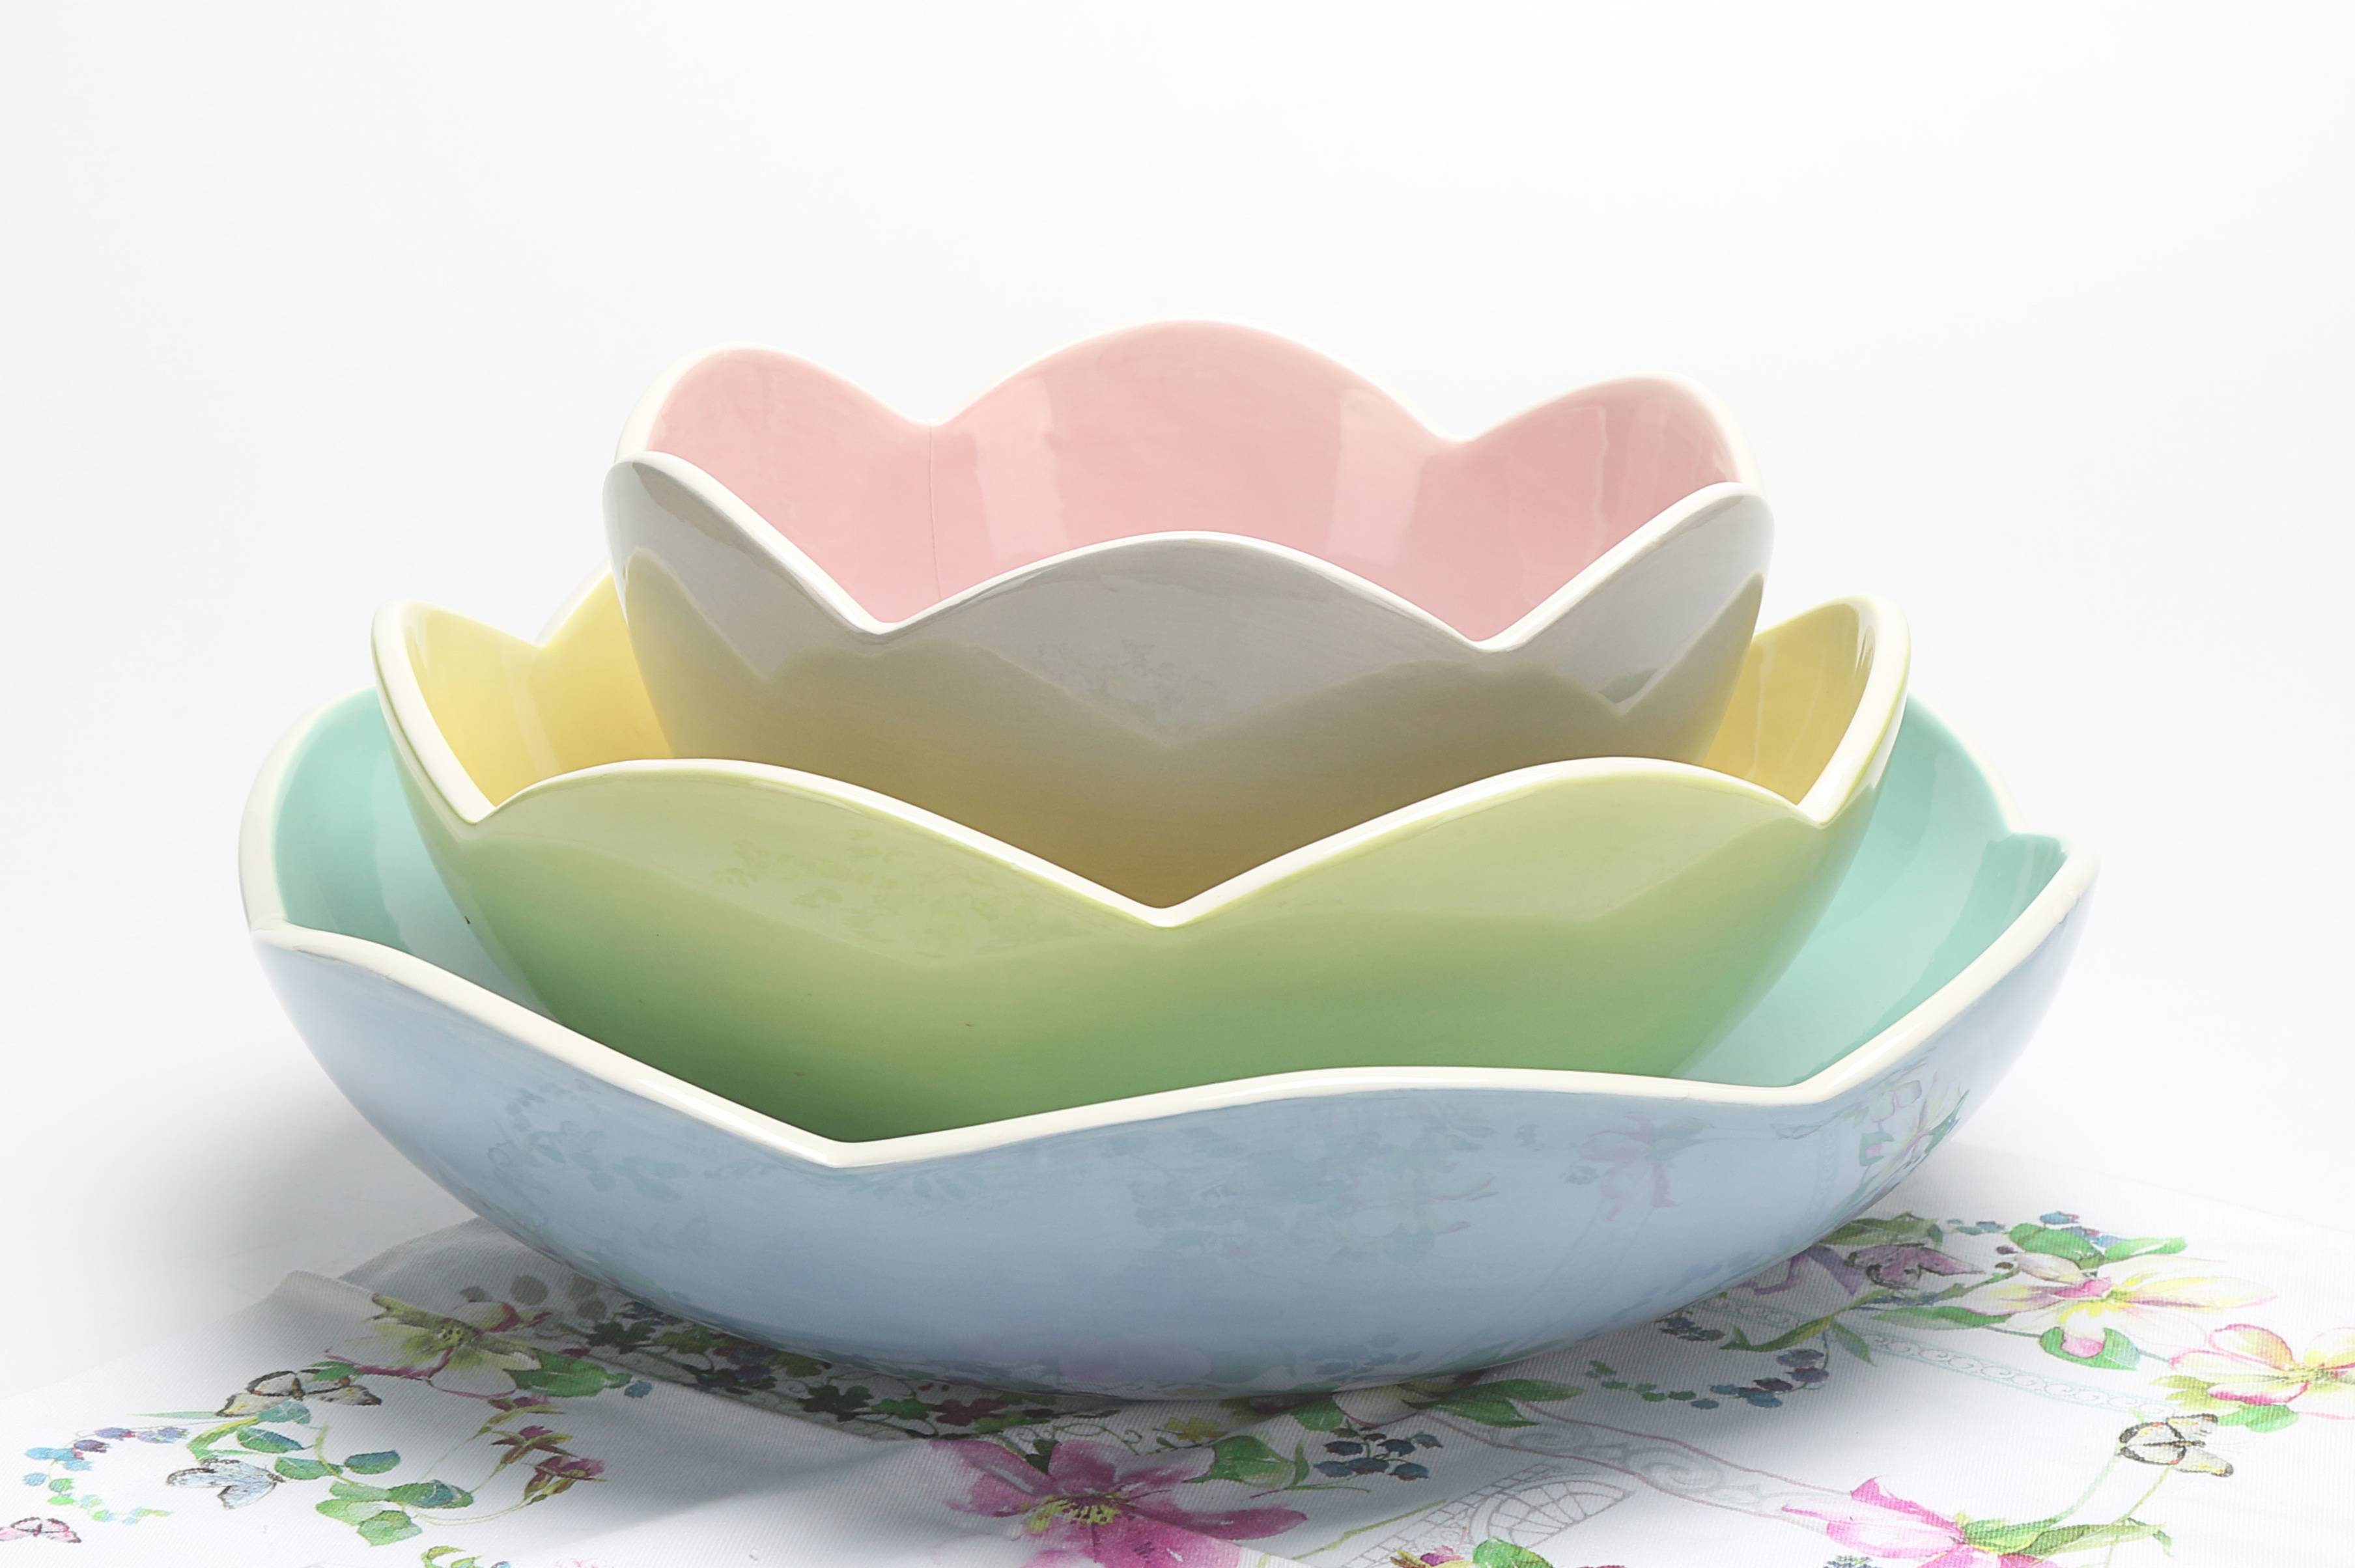 Mainstays Floral Shaped Ceramic Nested Bowl, Set of 3 - image 5 of 5